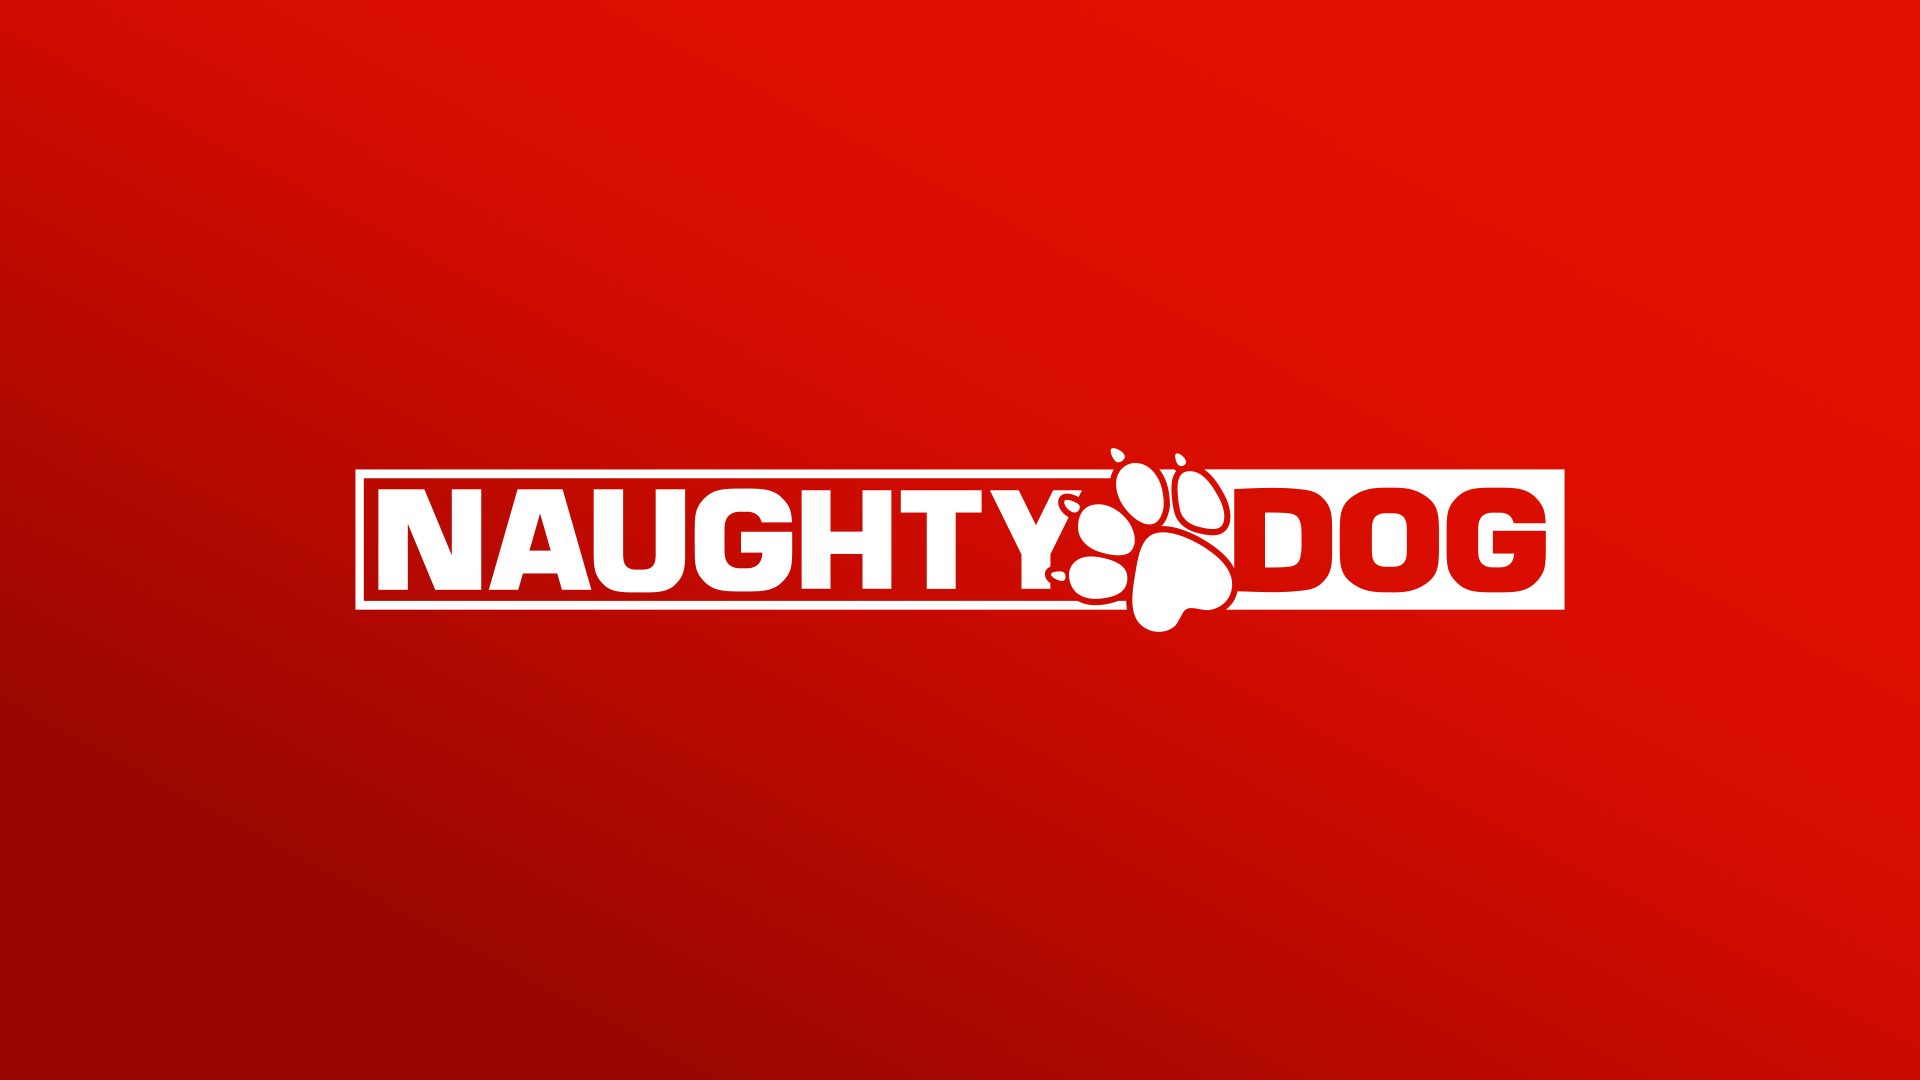 www.naughtydog.com